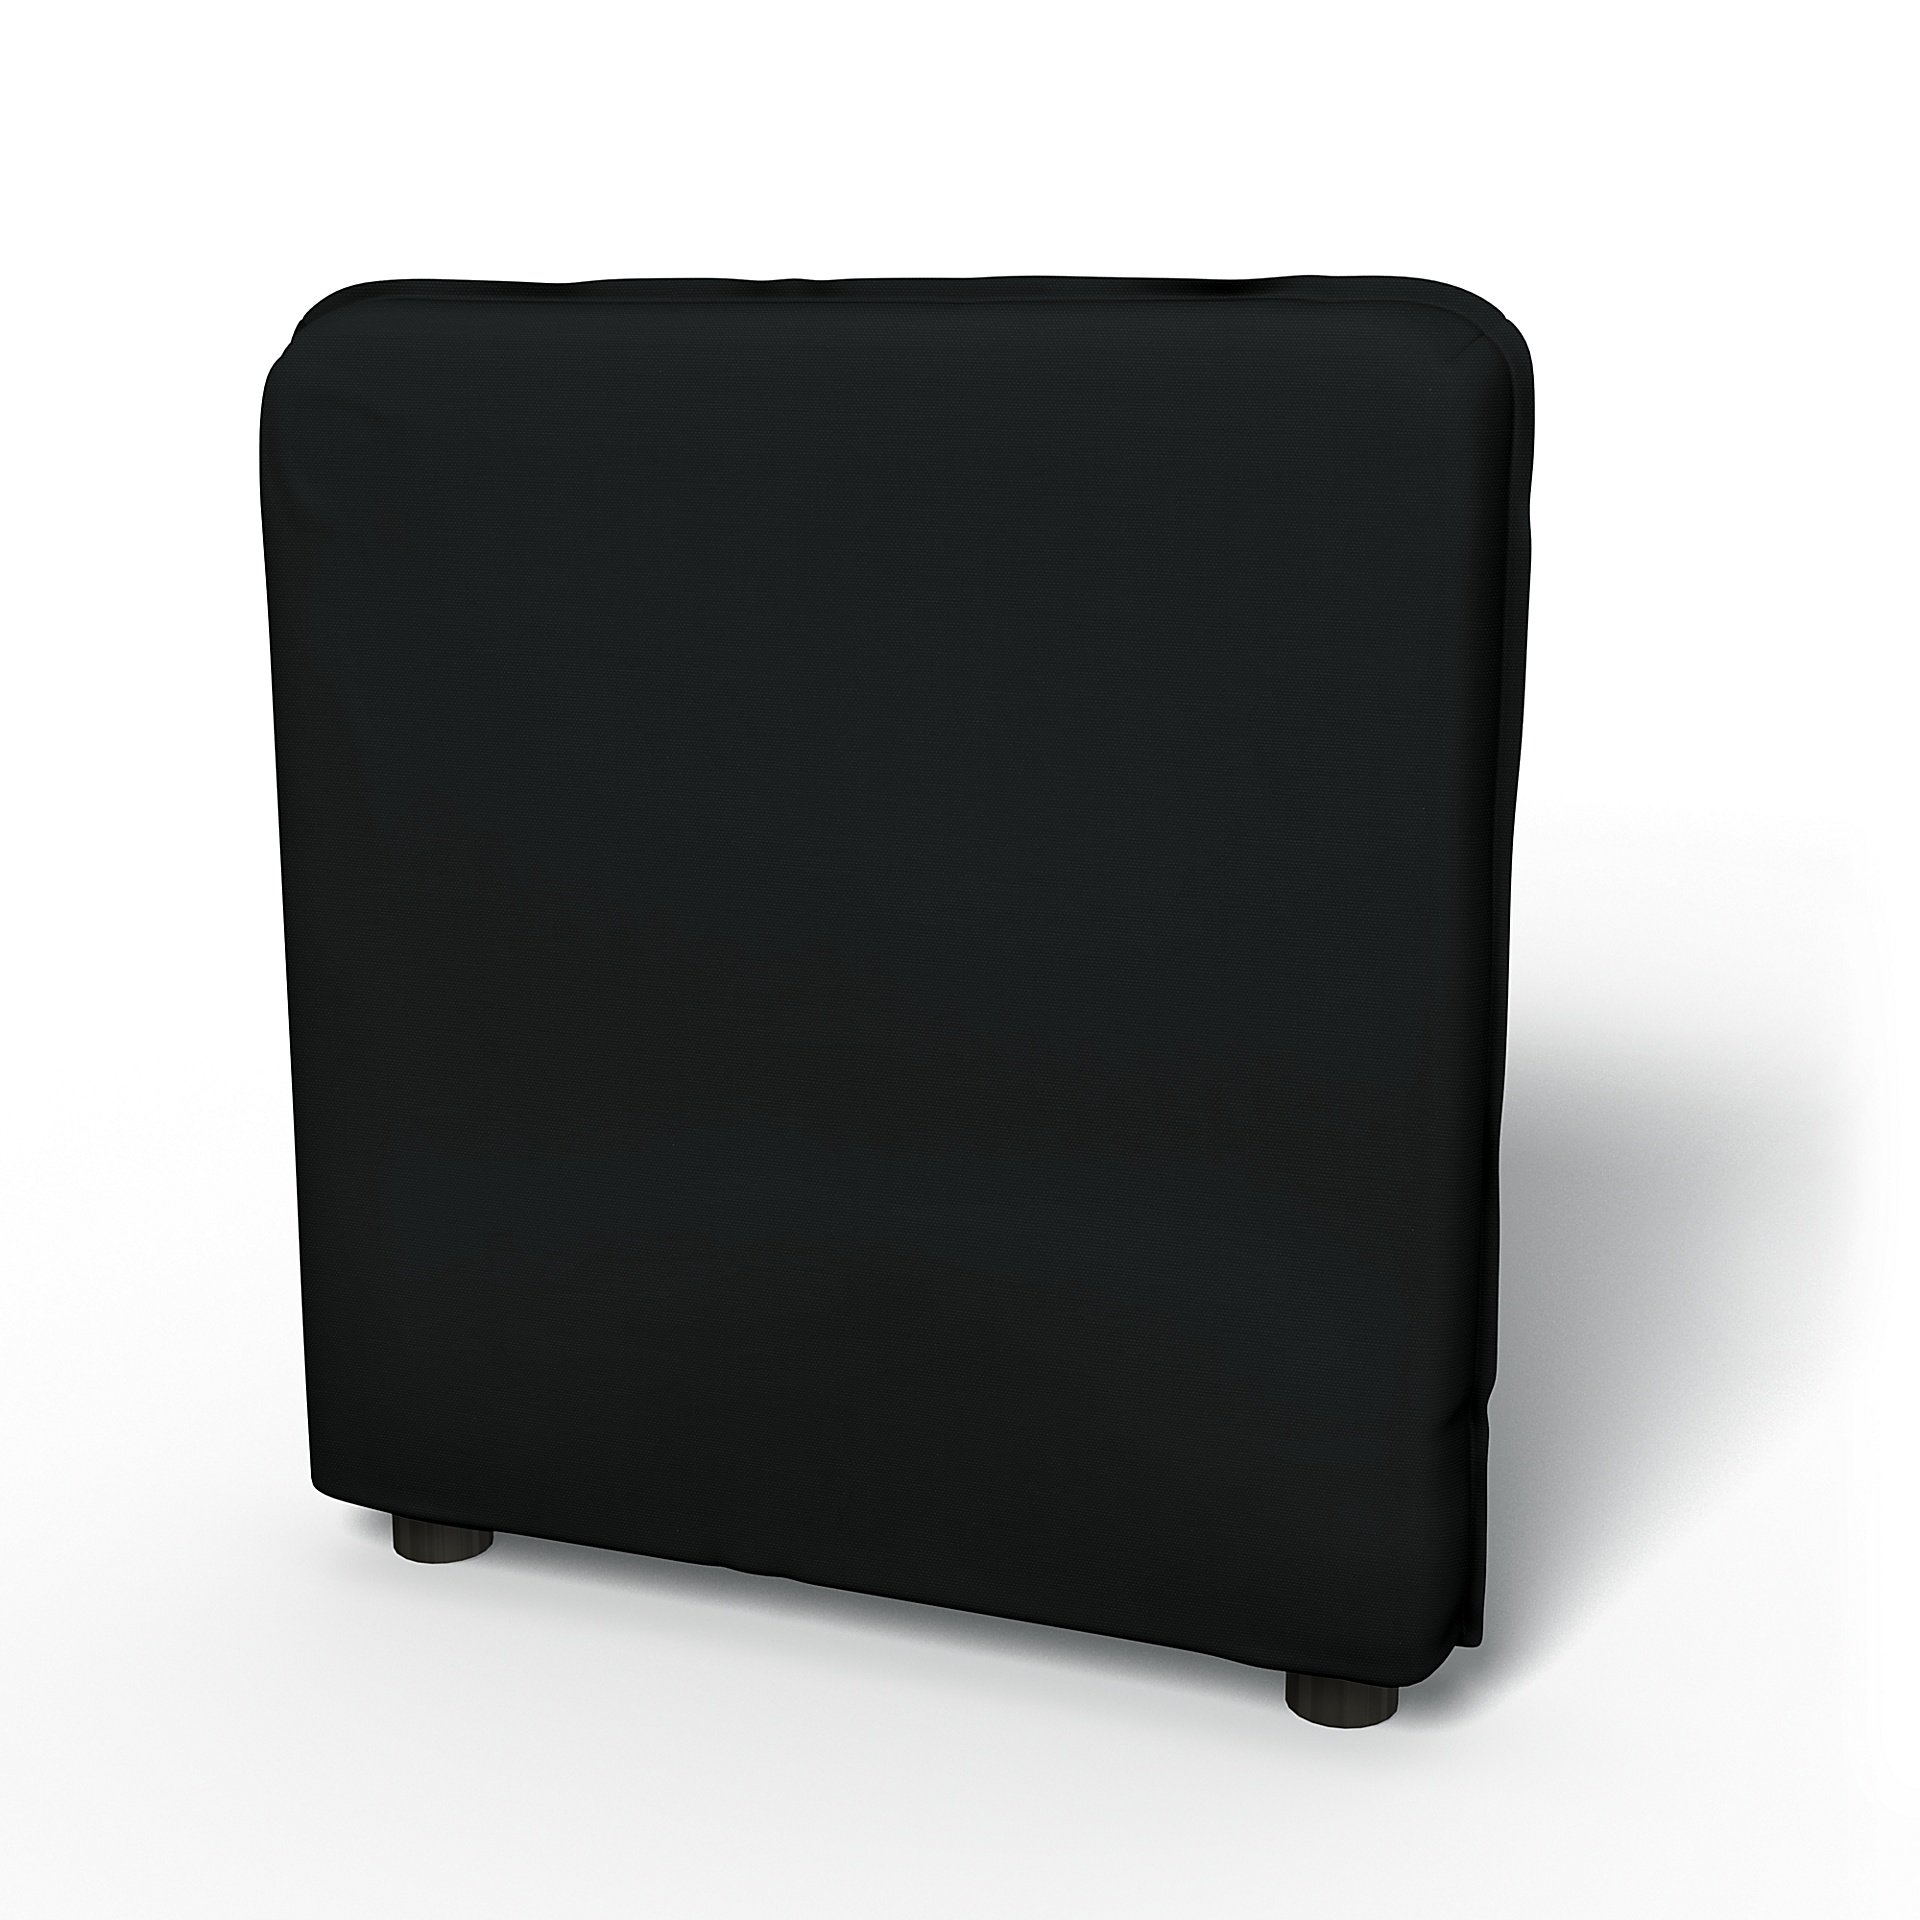 IKEA - Vallentuna Armrest Cover (80x60x13cm), Jet Black, Cotton - Bemz